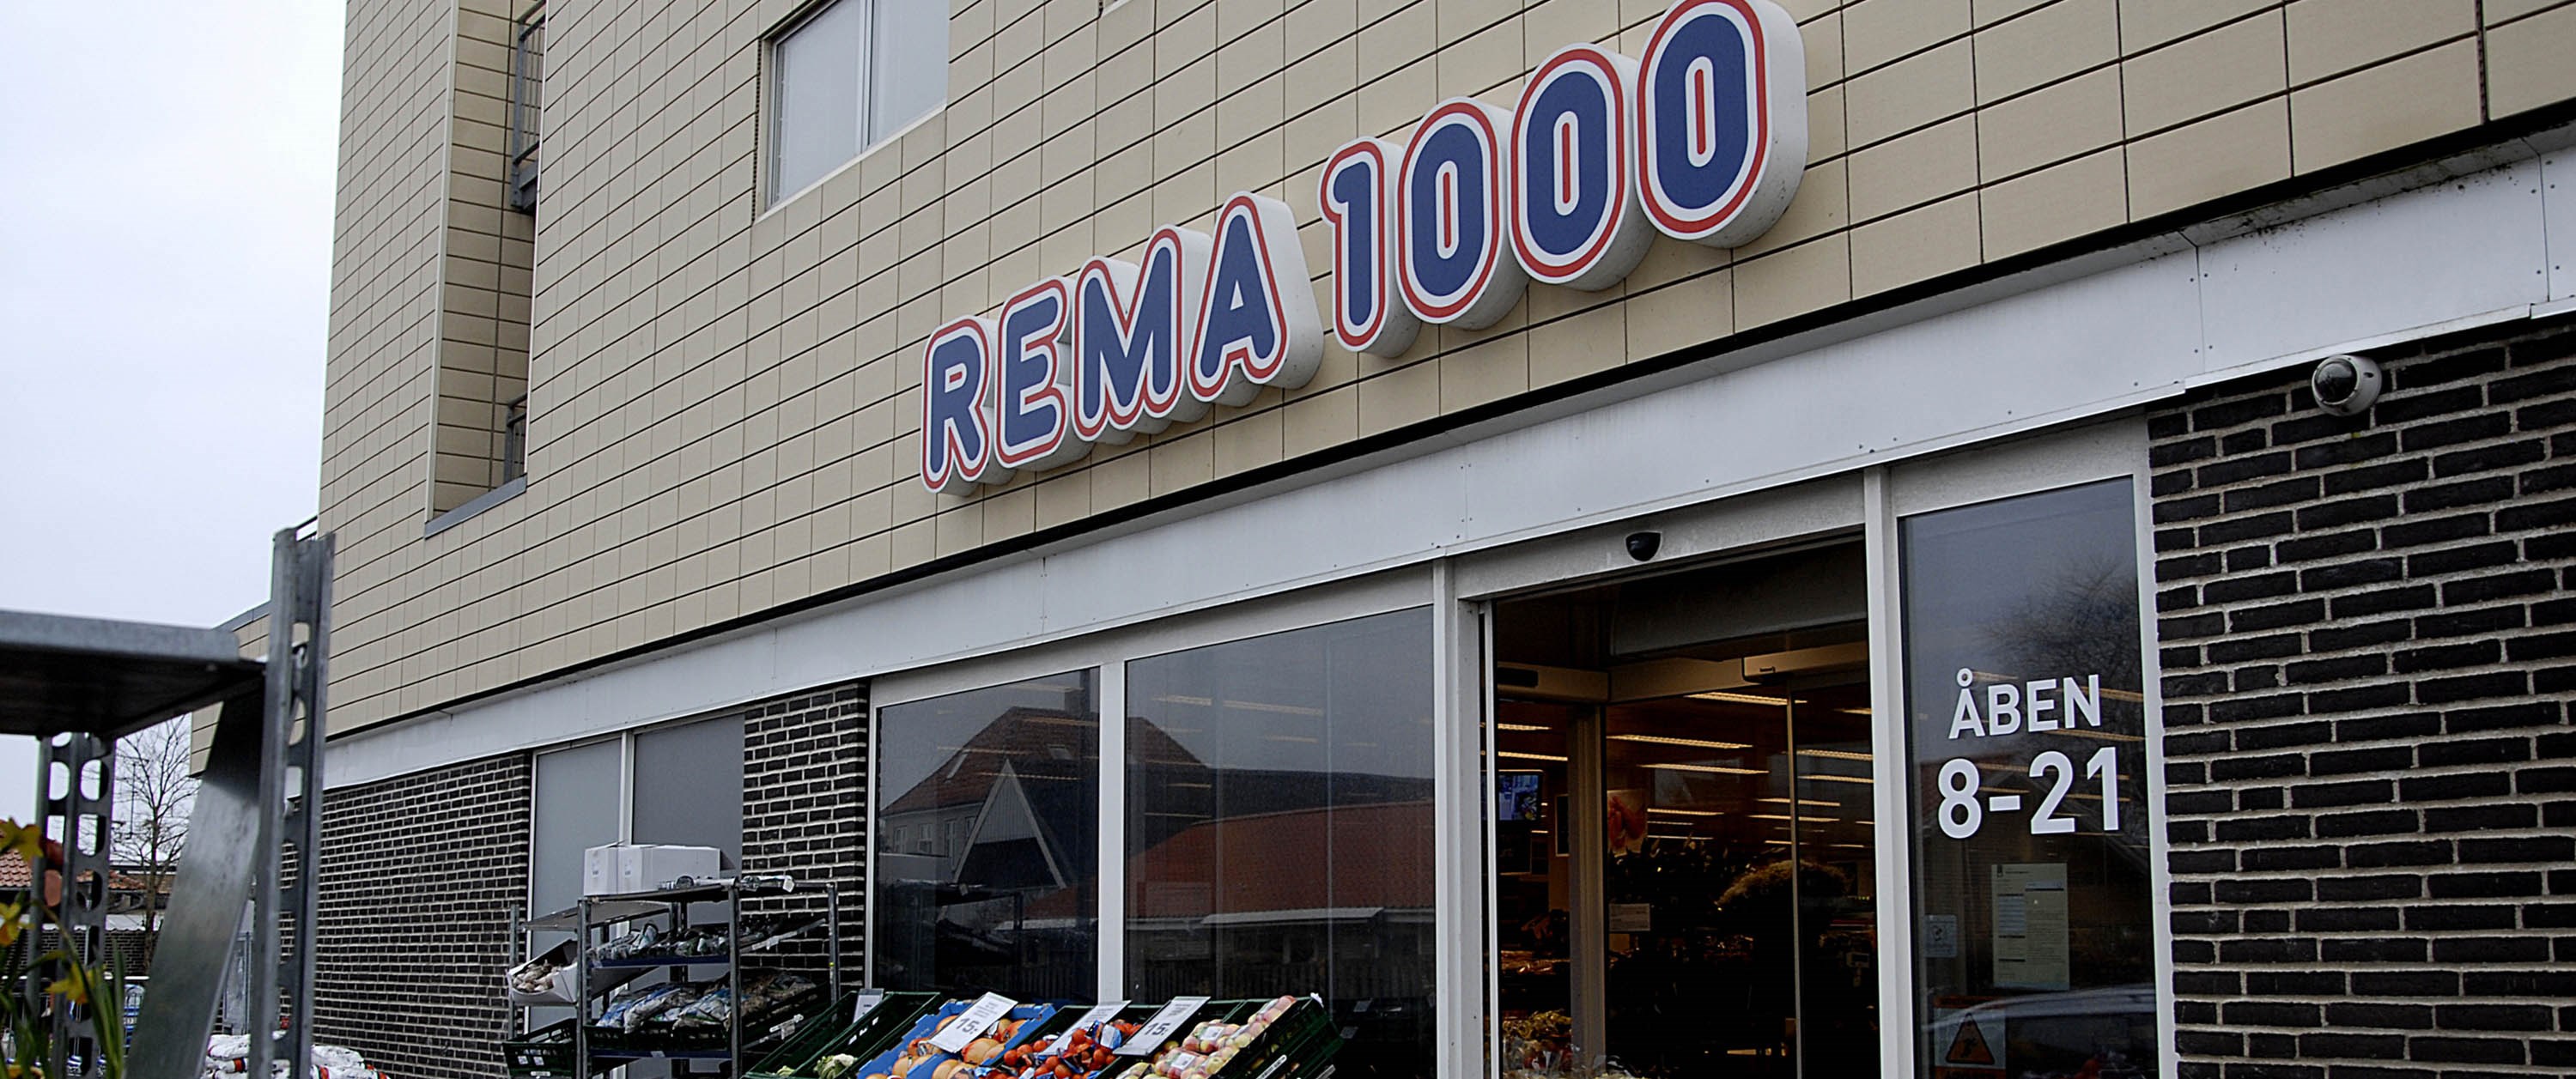 Danish Rema-store. Photo: Deanspictures/Dreamstime